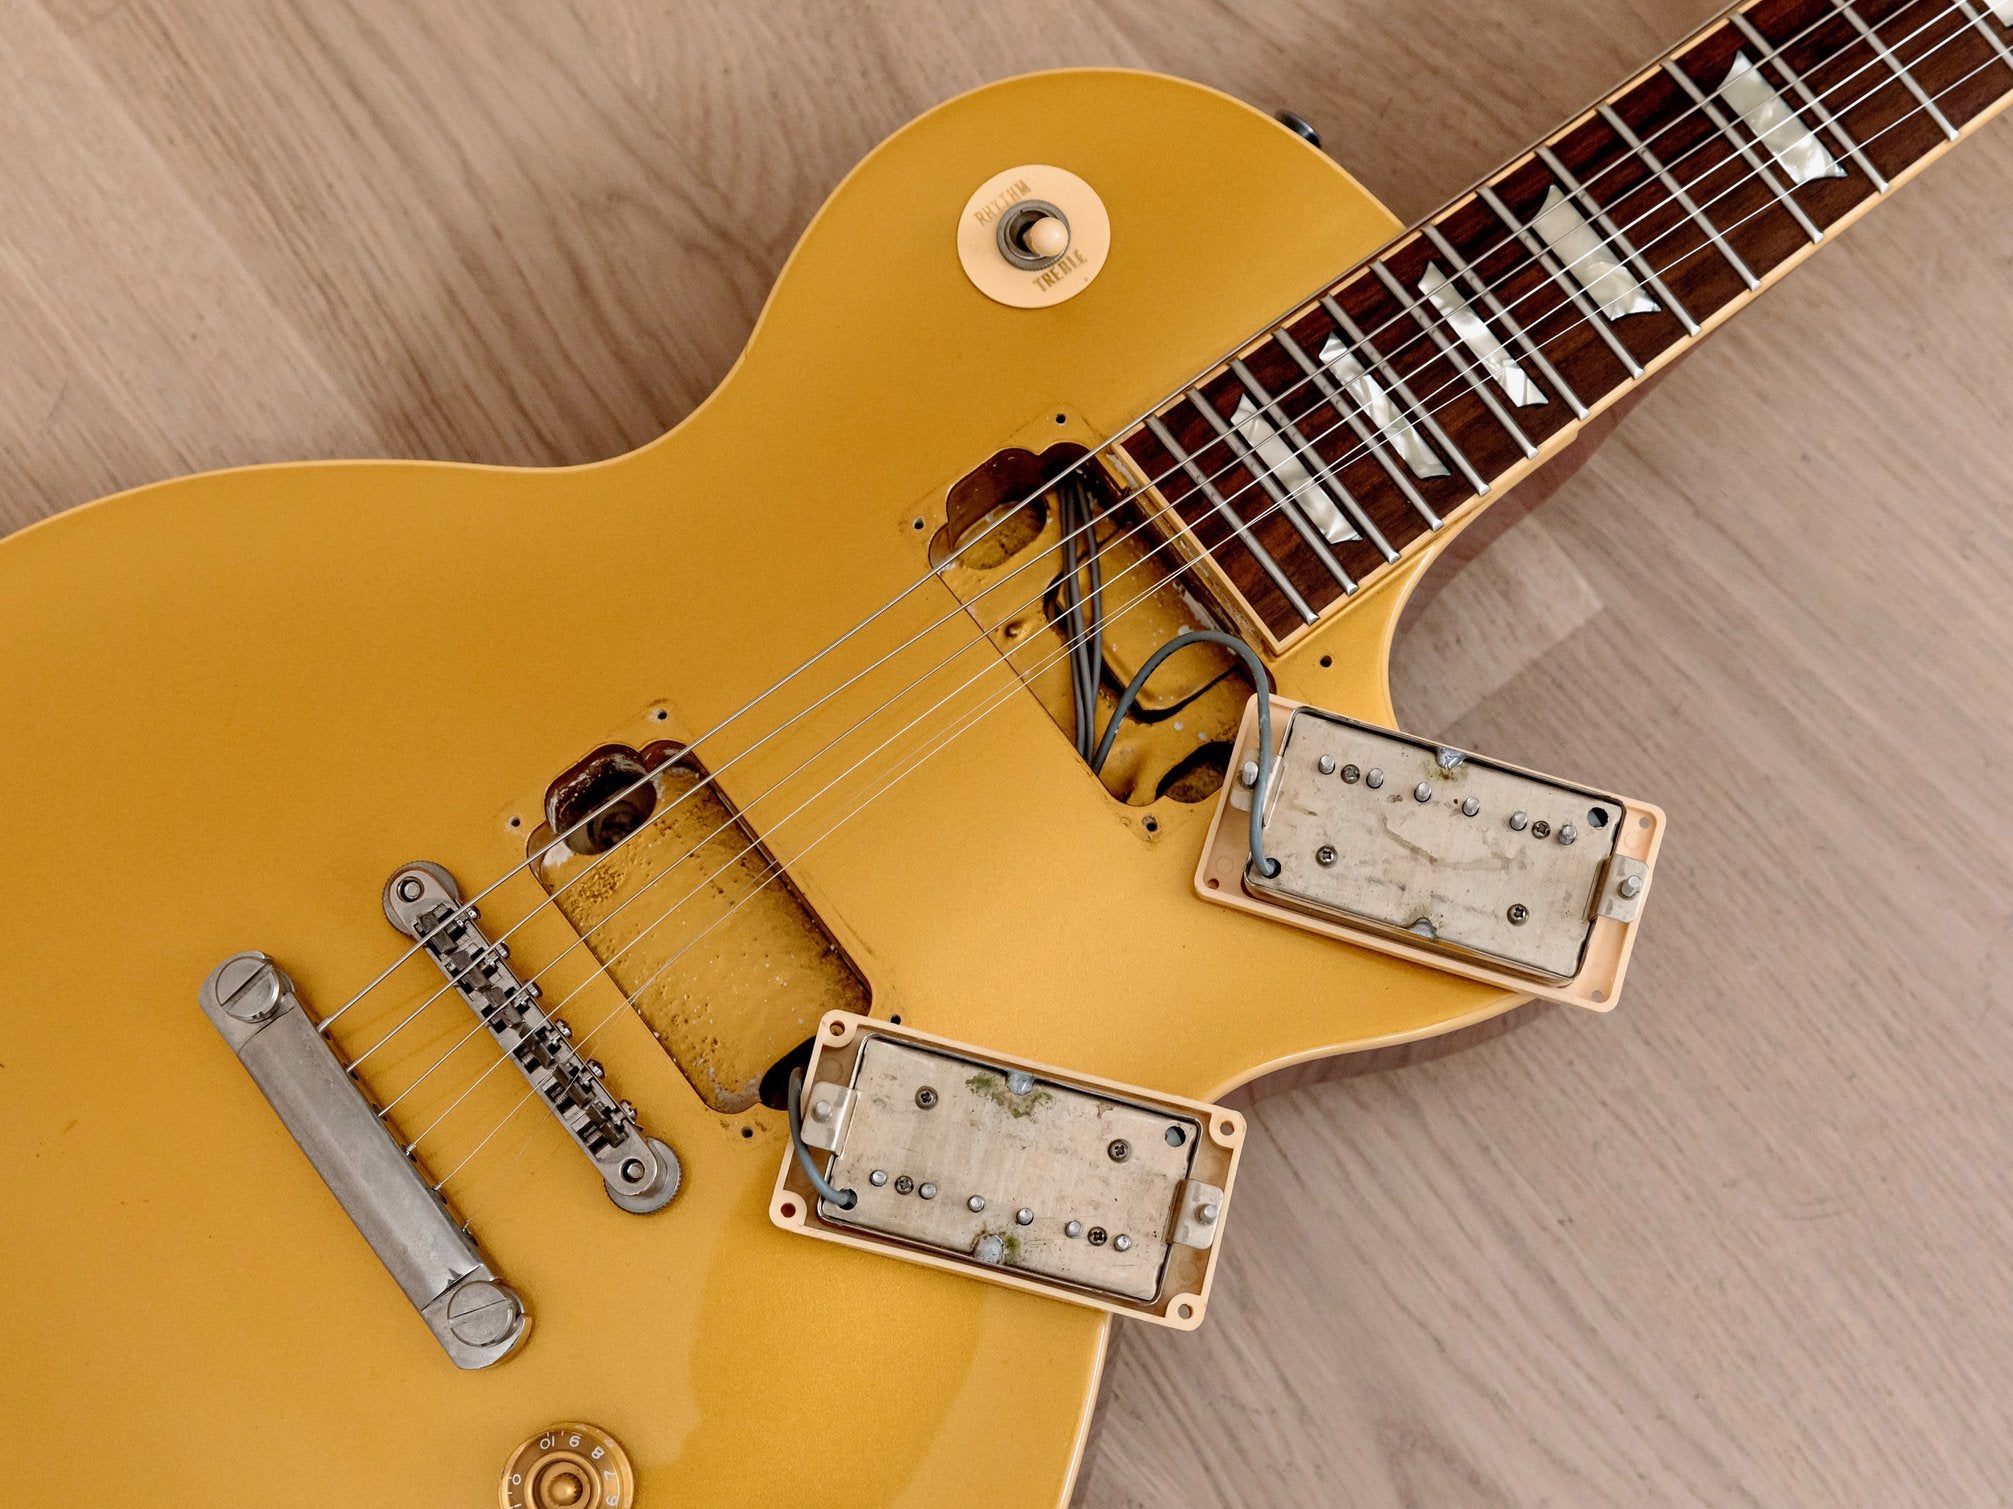 1998 Orville Les Paul Standard LPS-75 Goldtop Electric Guitar 100% Original, Japan Fujigen